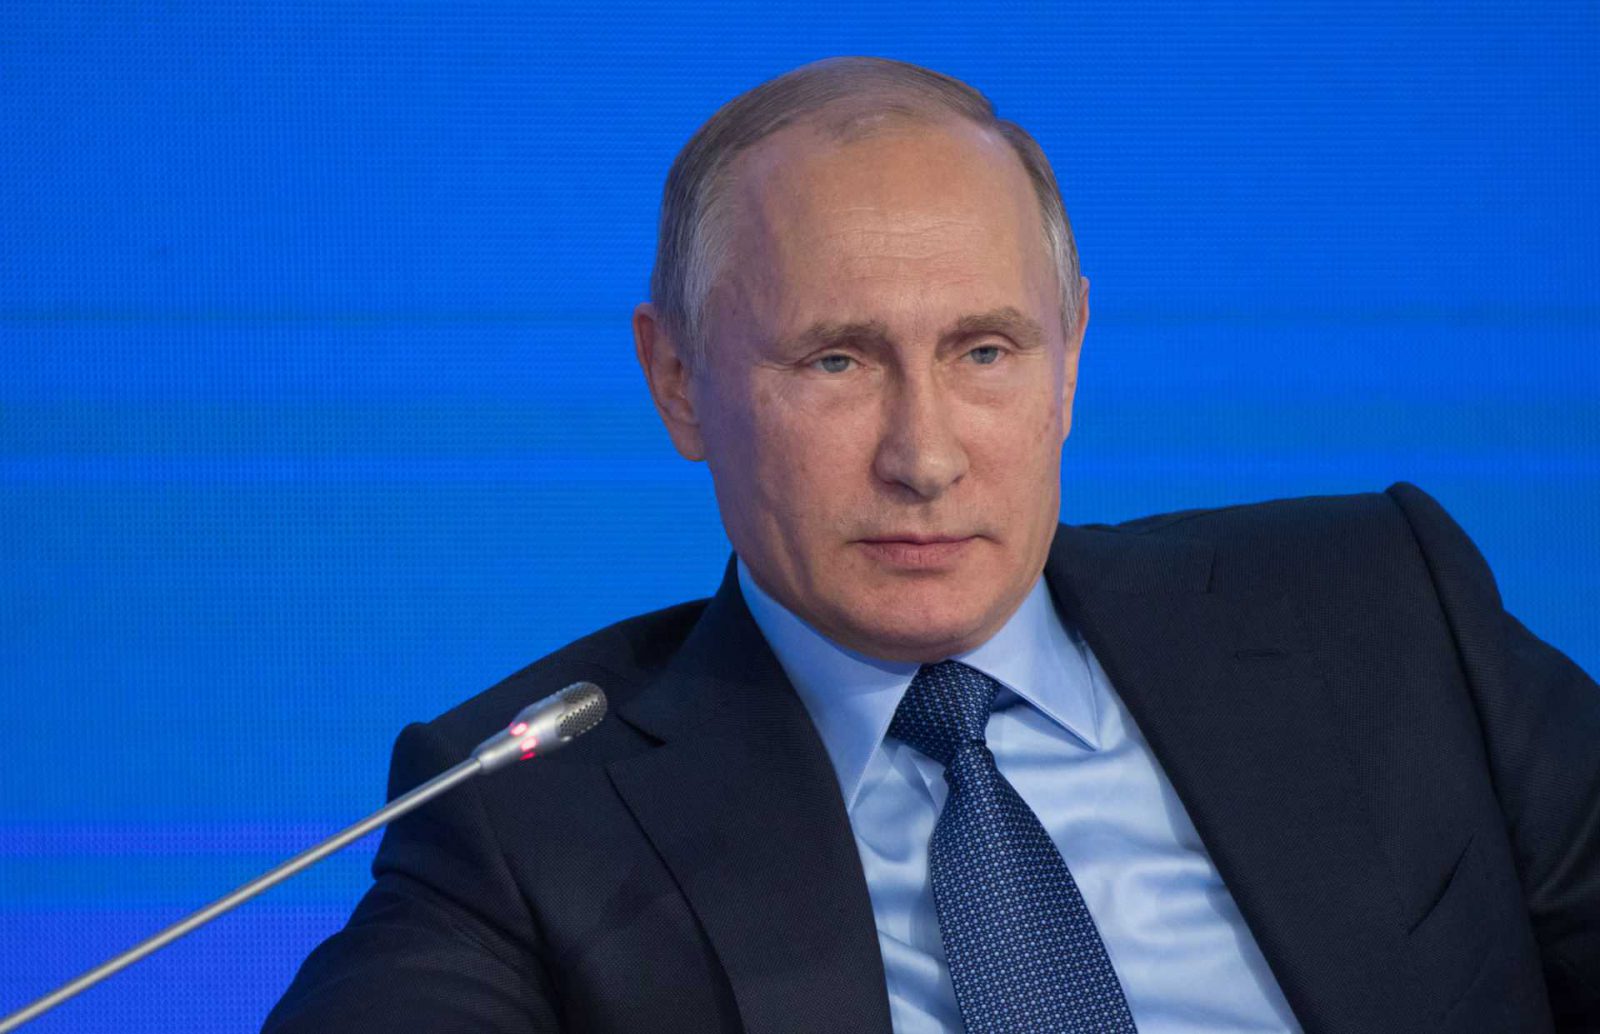 2958412 10/18/2016 October 18, 2016. Russian President Vladimir Putin attends a Delovaya Rossiya congress, held to mark the organization's 15th anniversary. Sergey Guneev/Sputnik